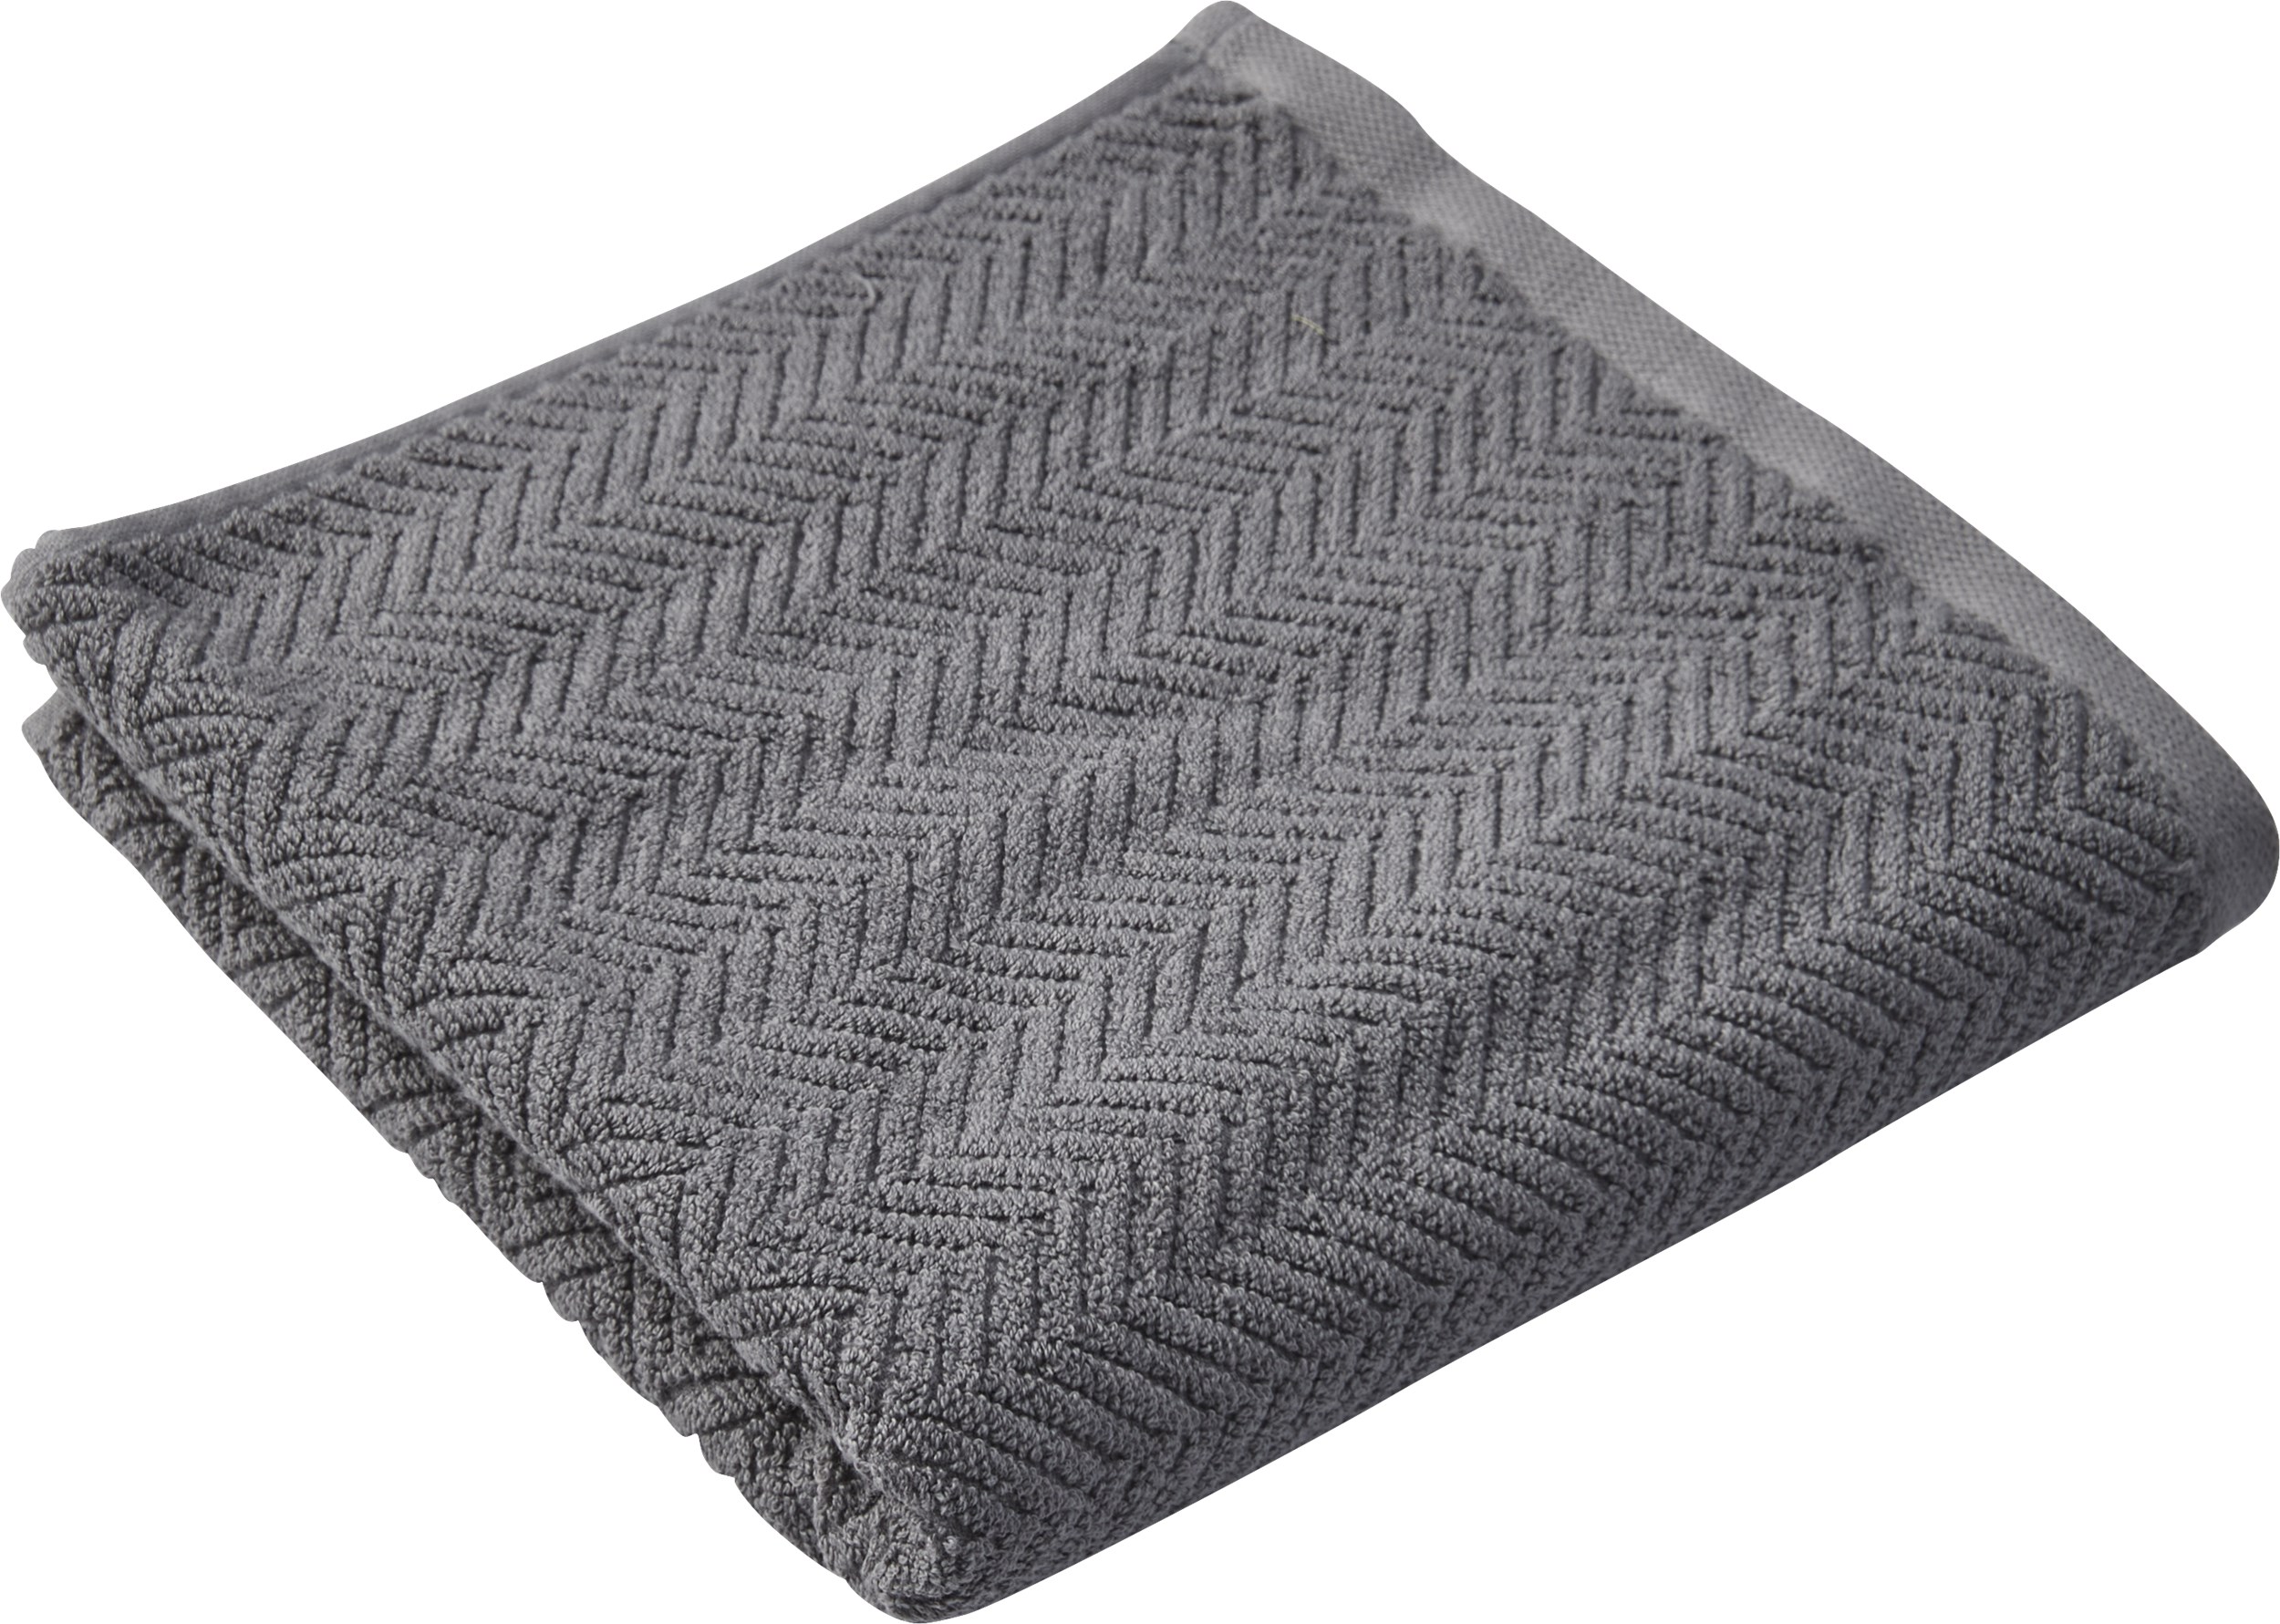 Visby Håndklæde 50 x 100 cm - Mørkegrå bomuld og sildebensmønster